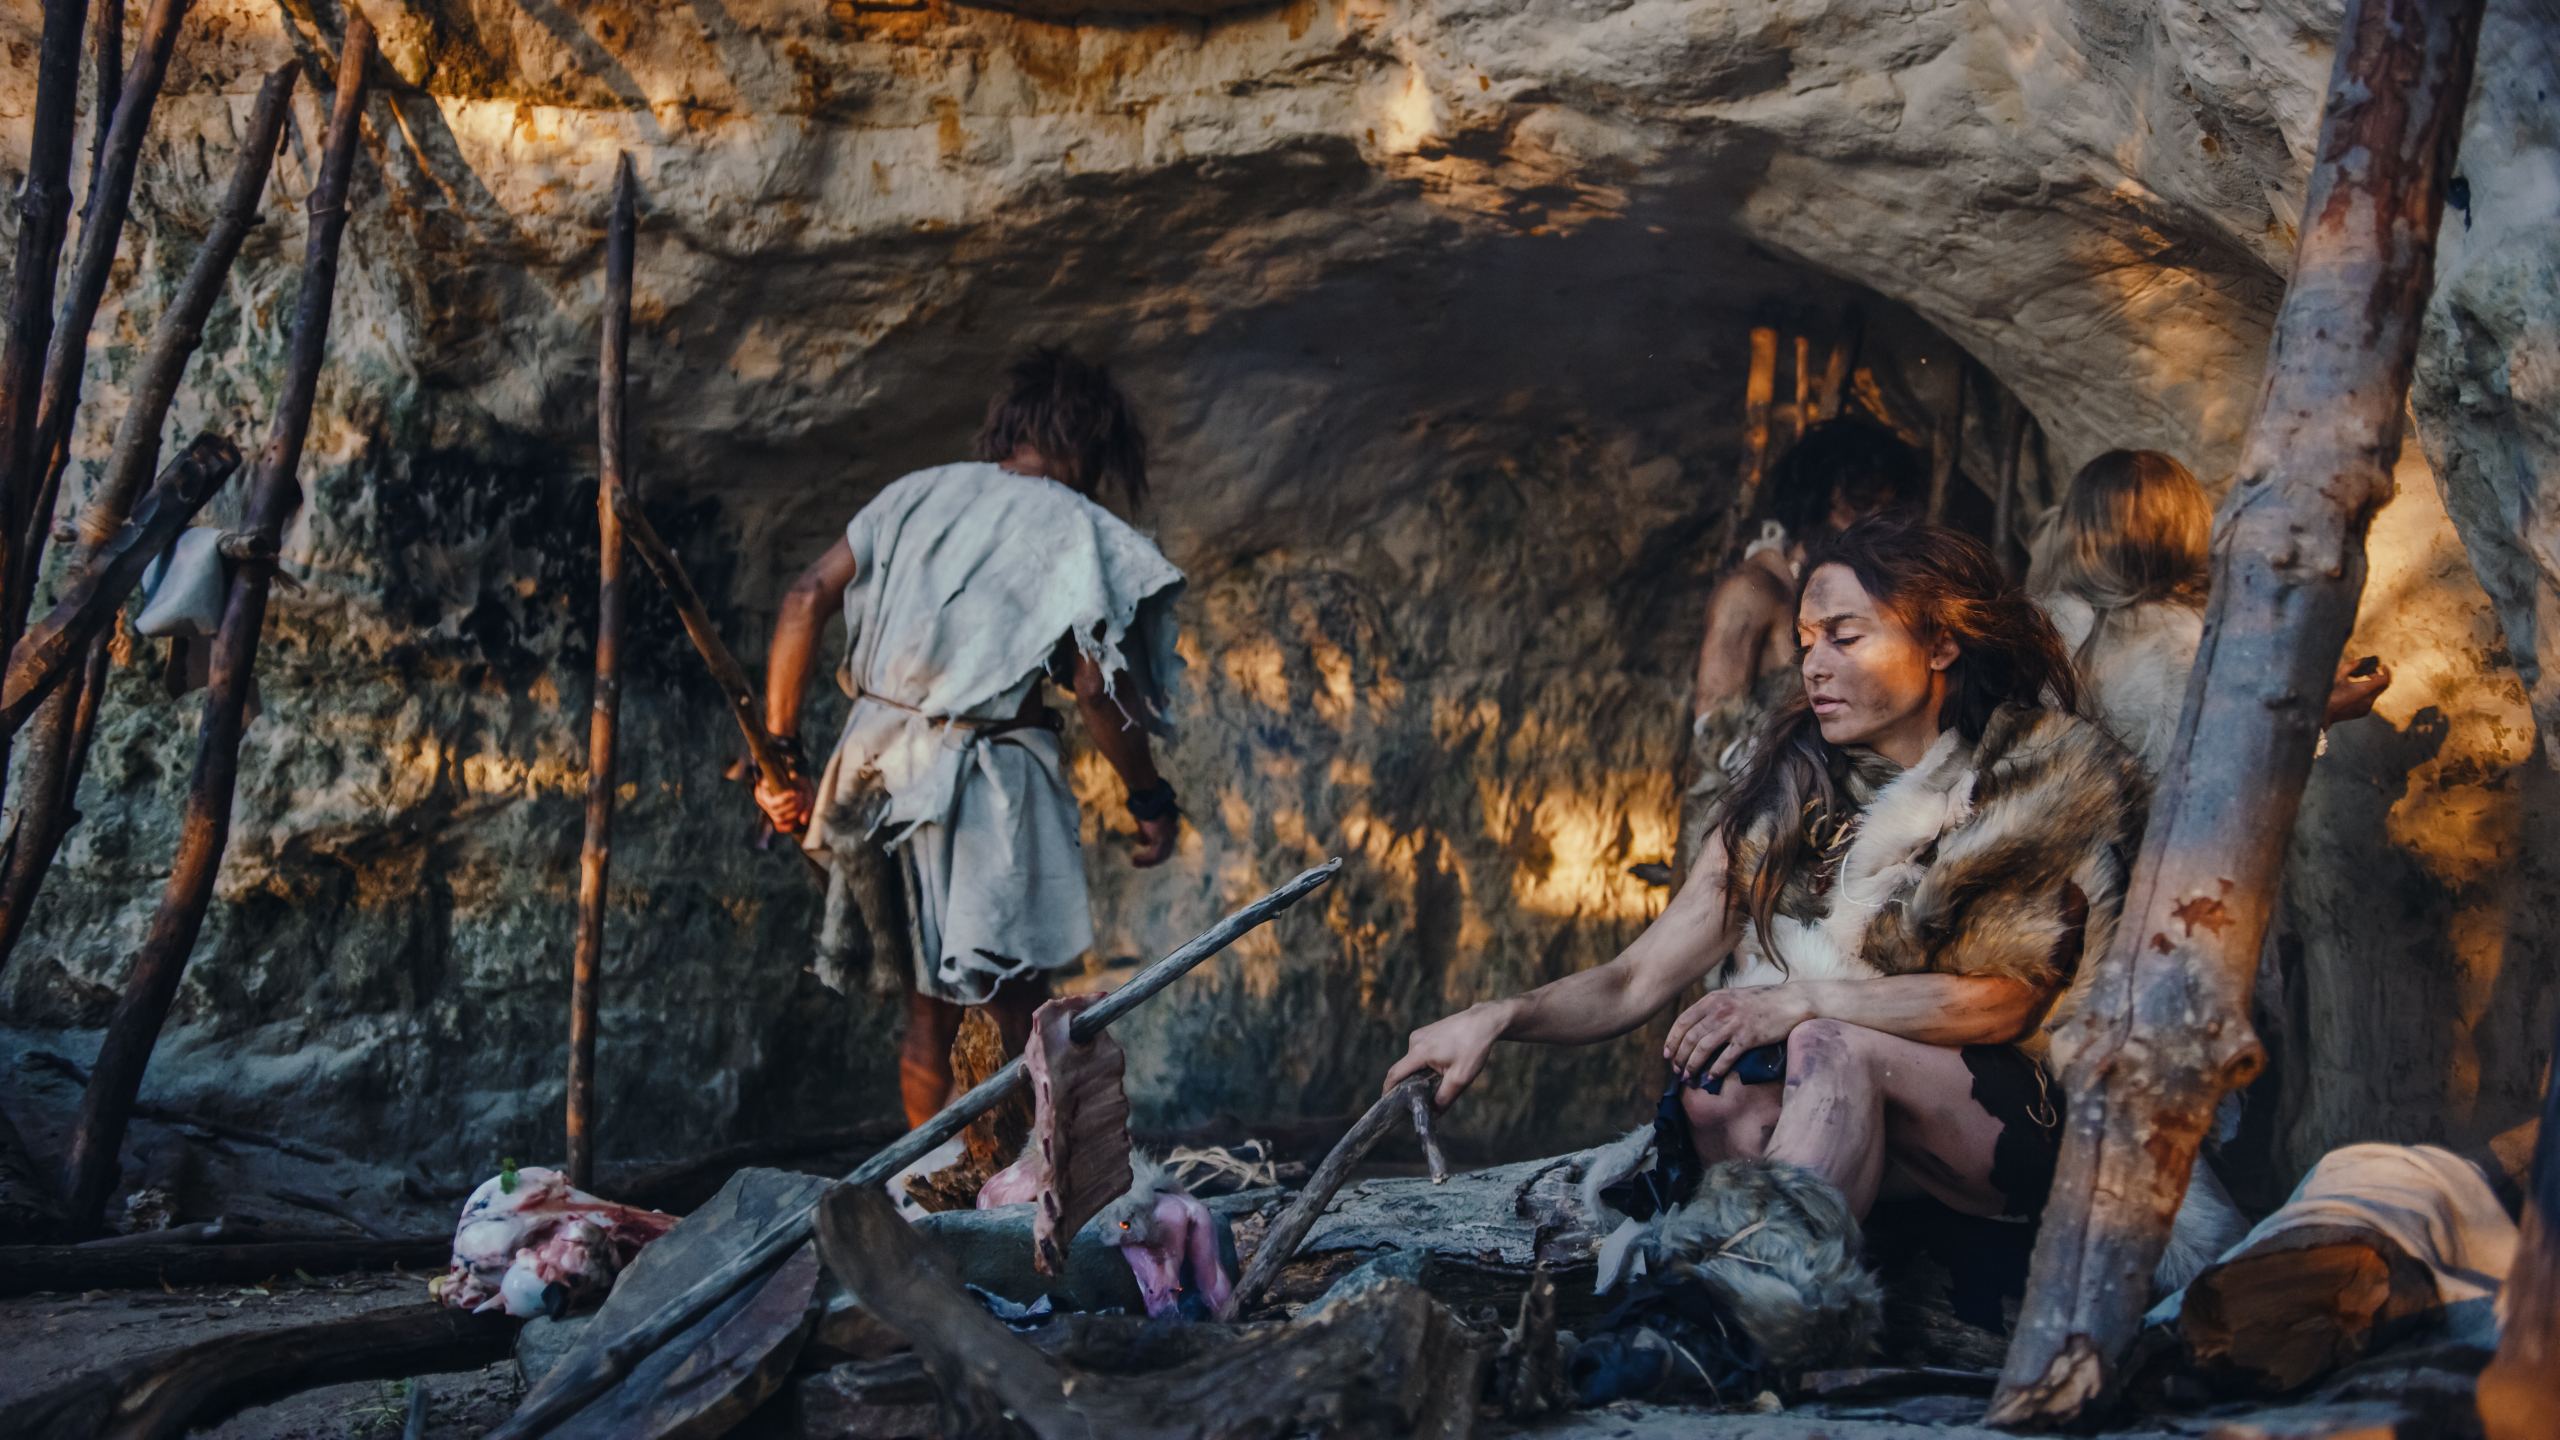 Gambar rekreasi Keluarga Homo Sapiens Neanderthal. Suku Pemburu-Pengumpul Mengenakan Kulit Binatang Tinggal di Gua. Pemimpin Membawa Hewan Mangsa dari Perburuan, Wanita Memasak Makanan di Api Unggun, Gadis Menggambar di Wals Menciptakan Seni.